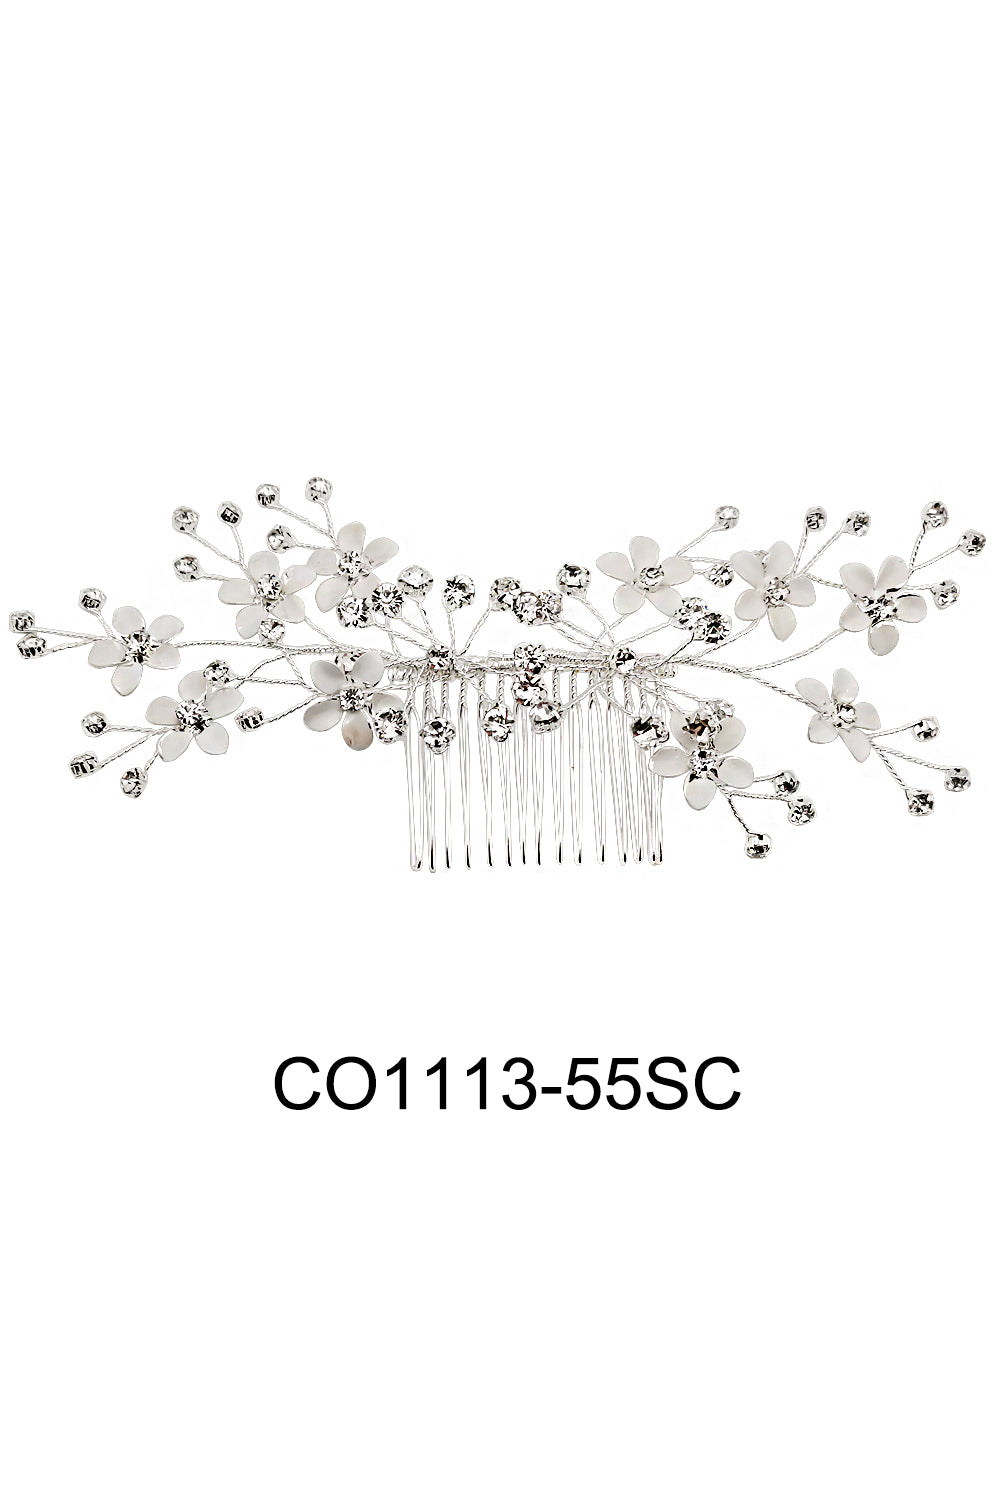 CO1113-55SC (6PC)